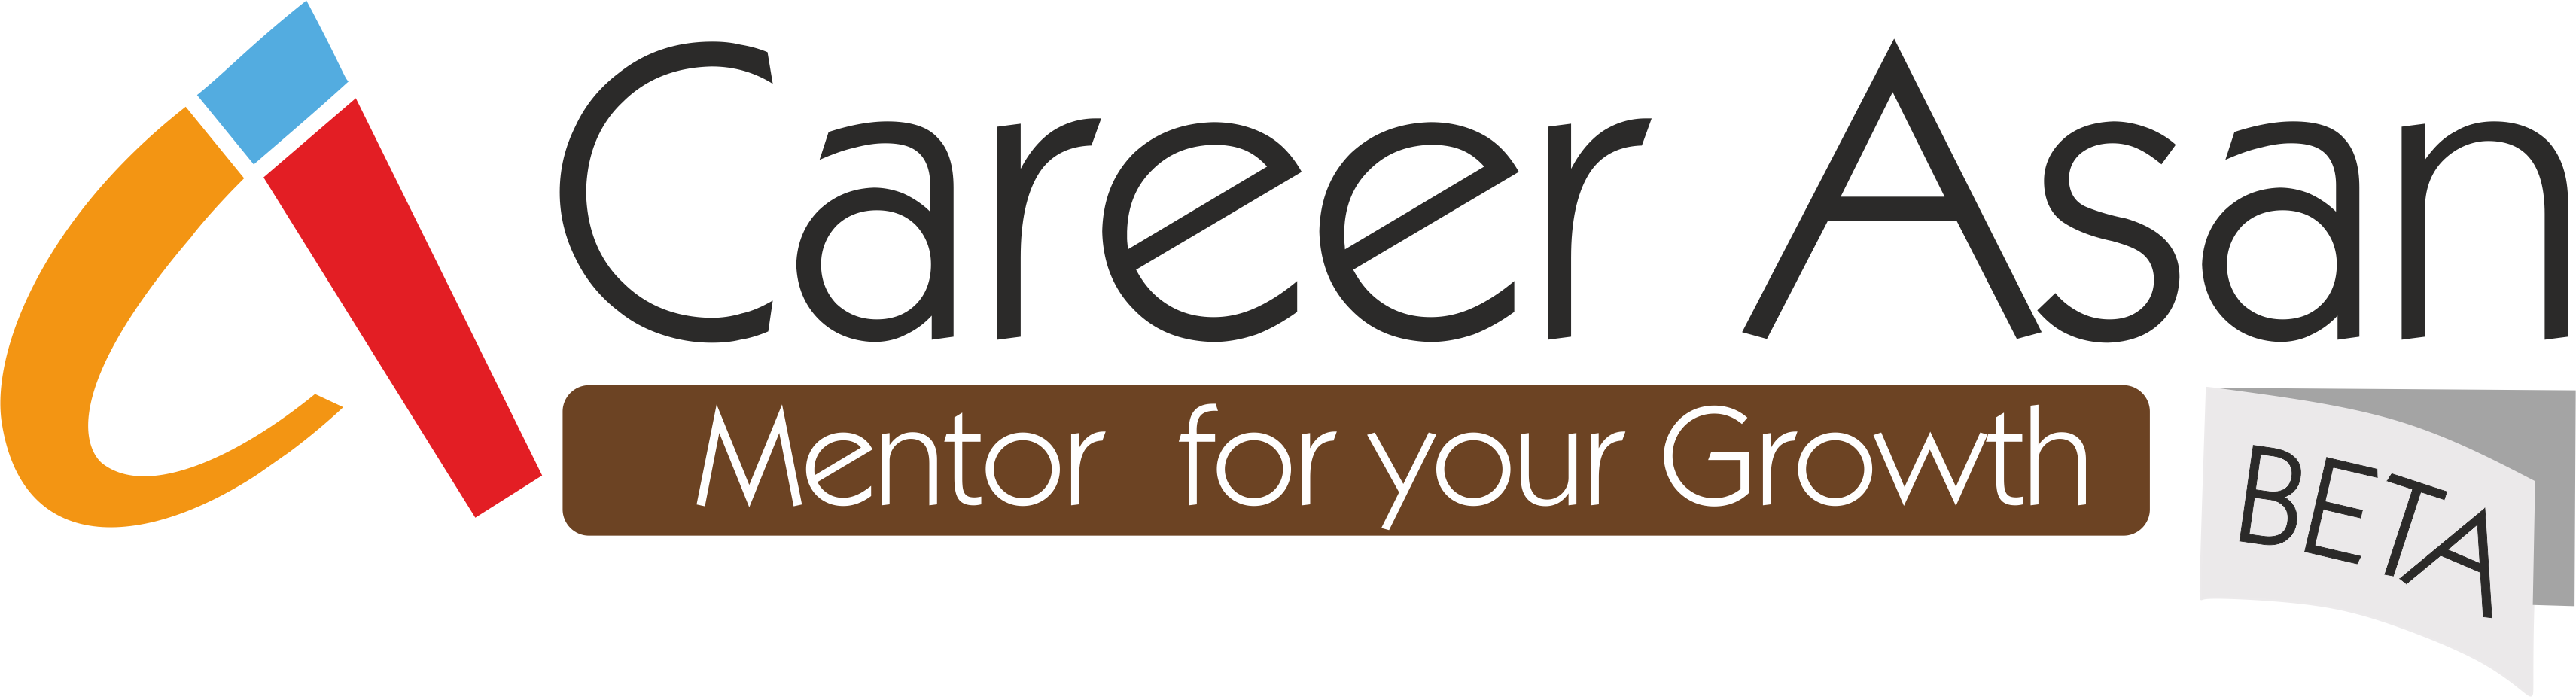 Career Asan | Mentor for your Growth | Free Jobportal